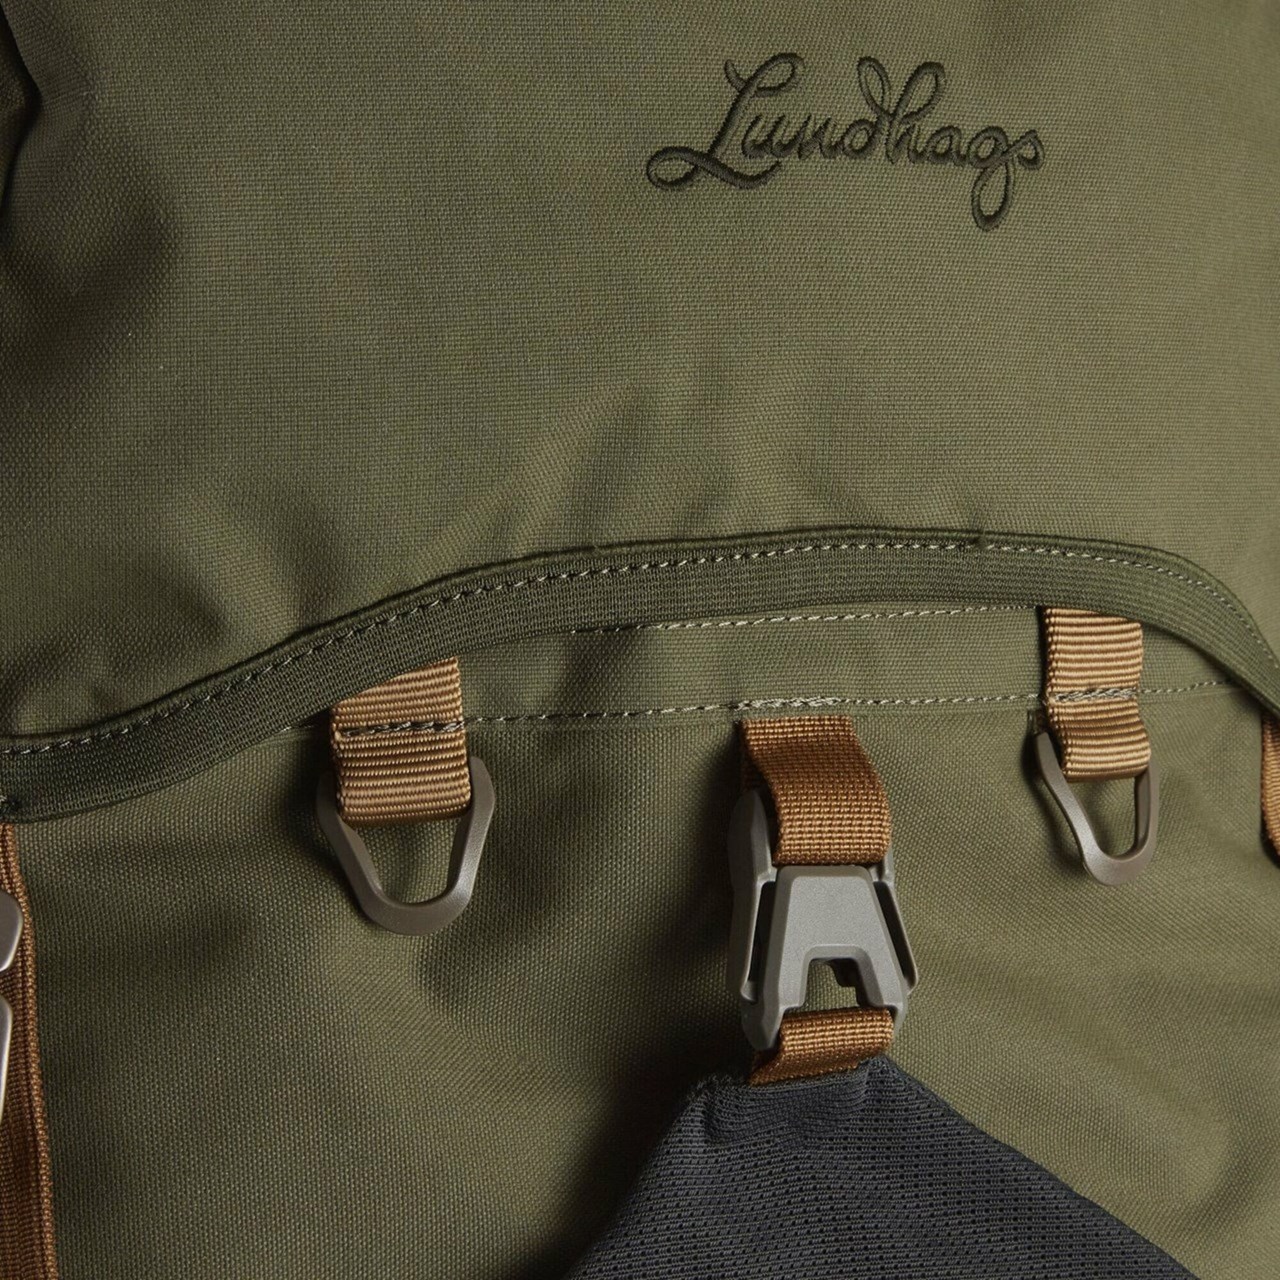 Lundhags Saruk Pro 75L Regular Short hiking backpack